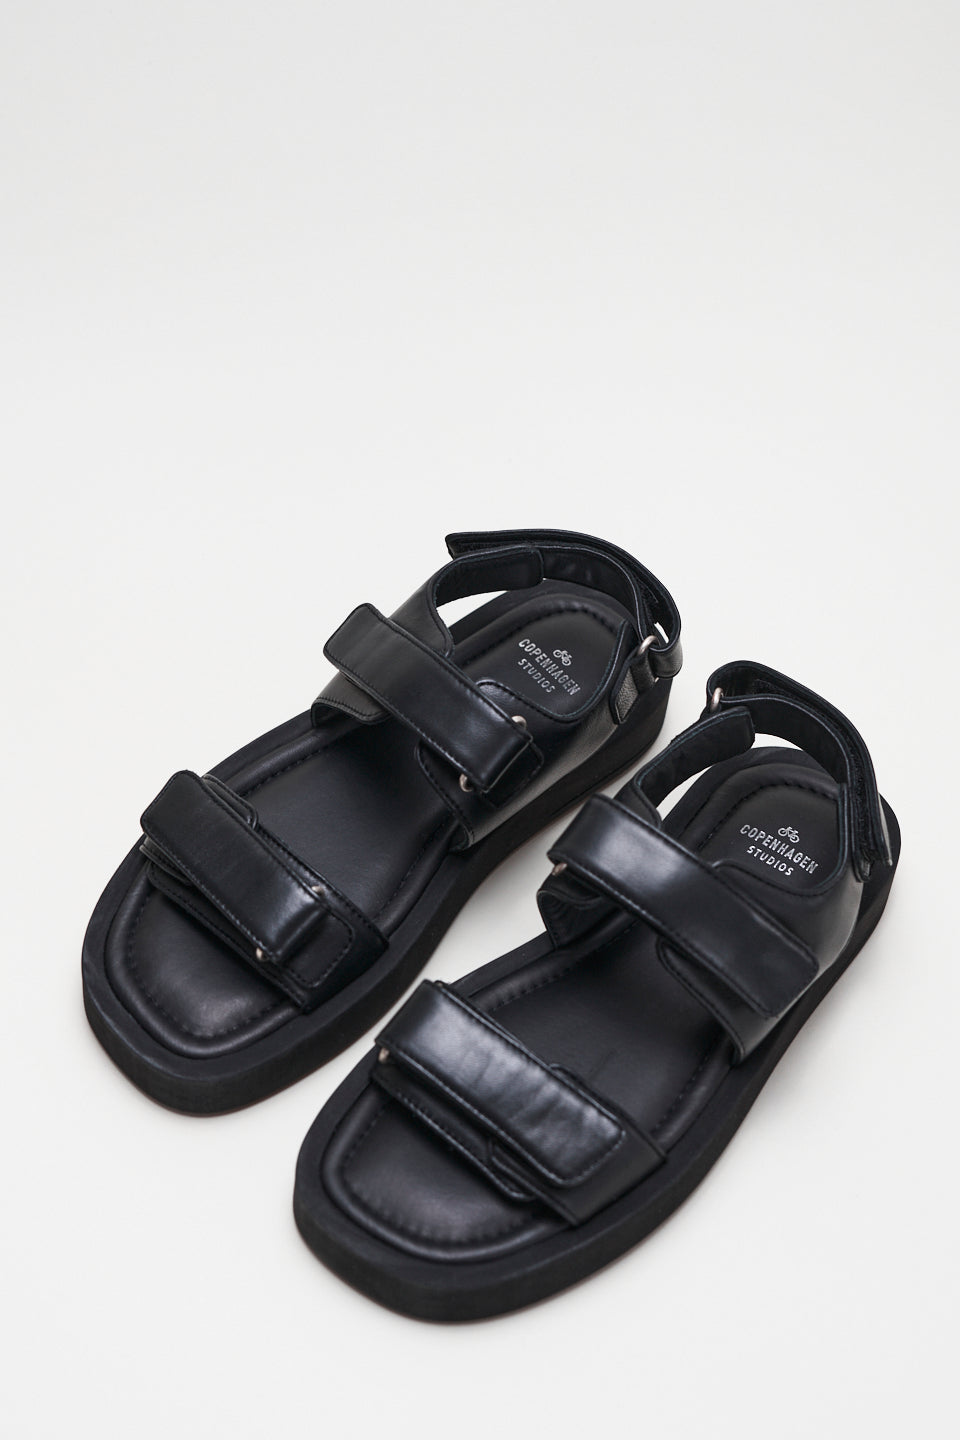 Nappa Black Velcro Straps Chunky Sandals Sandals